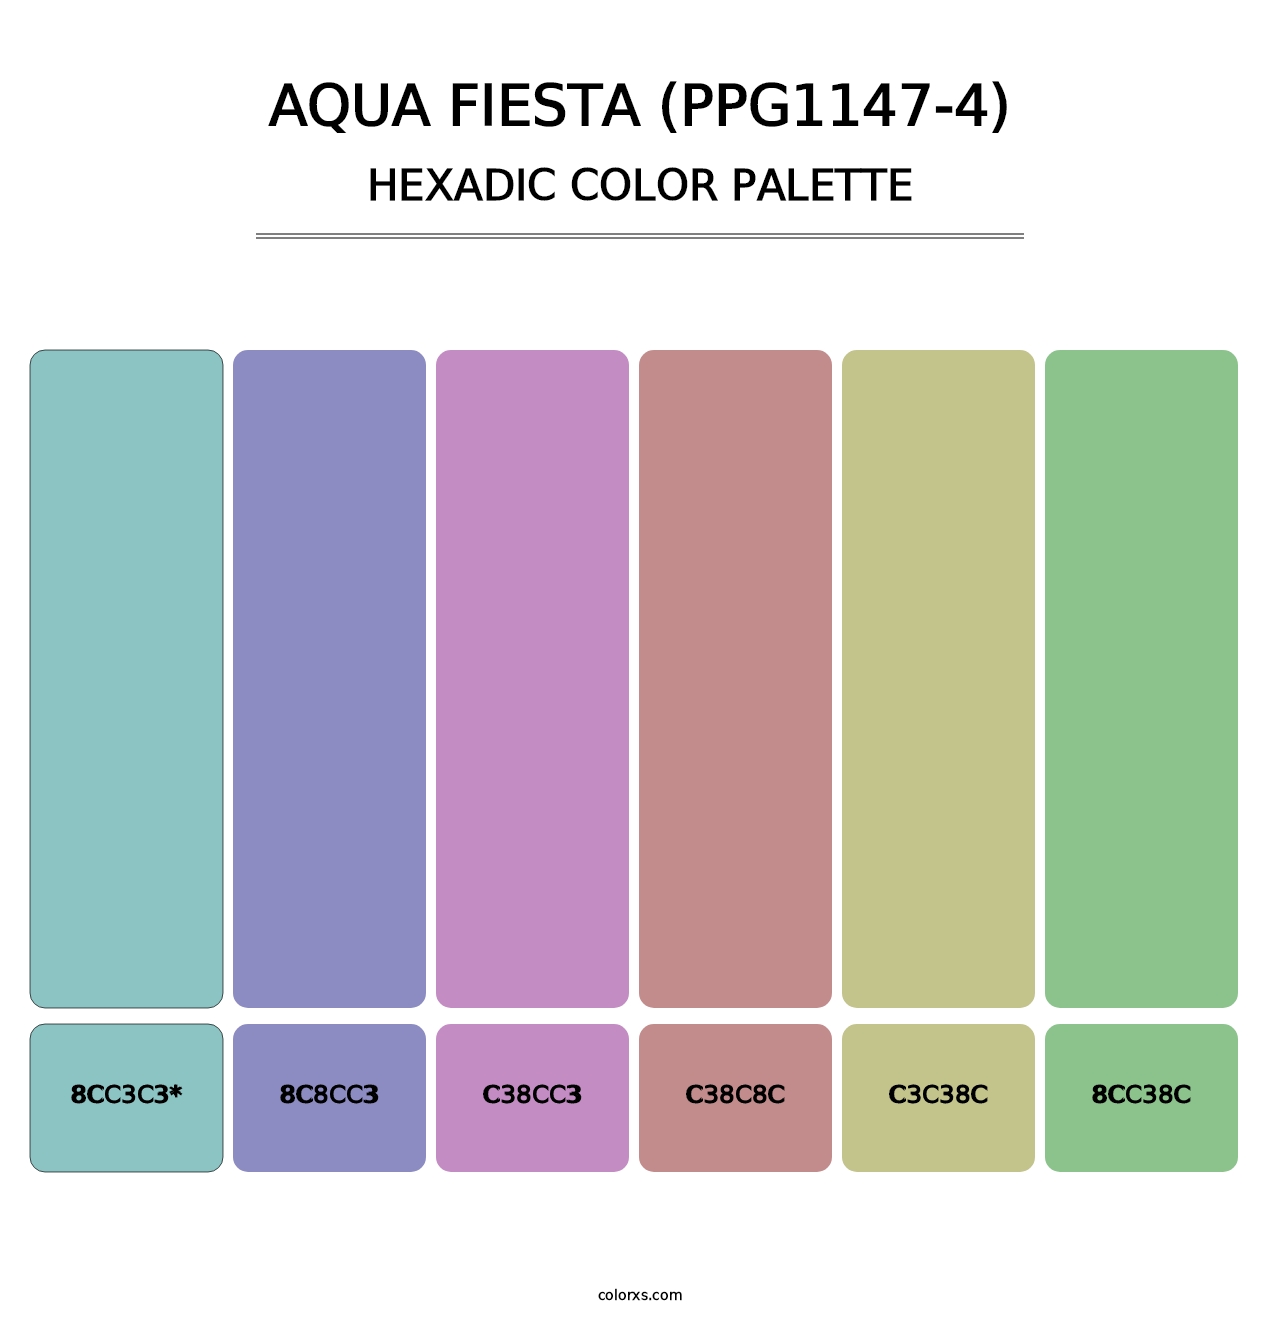 Aqua Fiesta (PPG1147-4) - Hexadic Color Palette